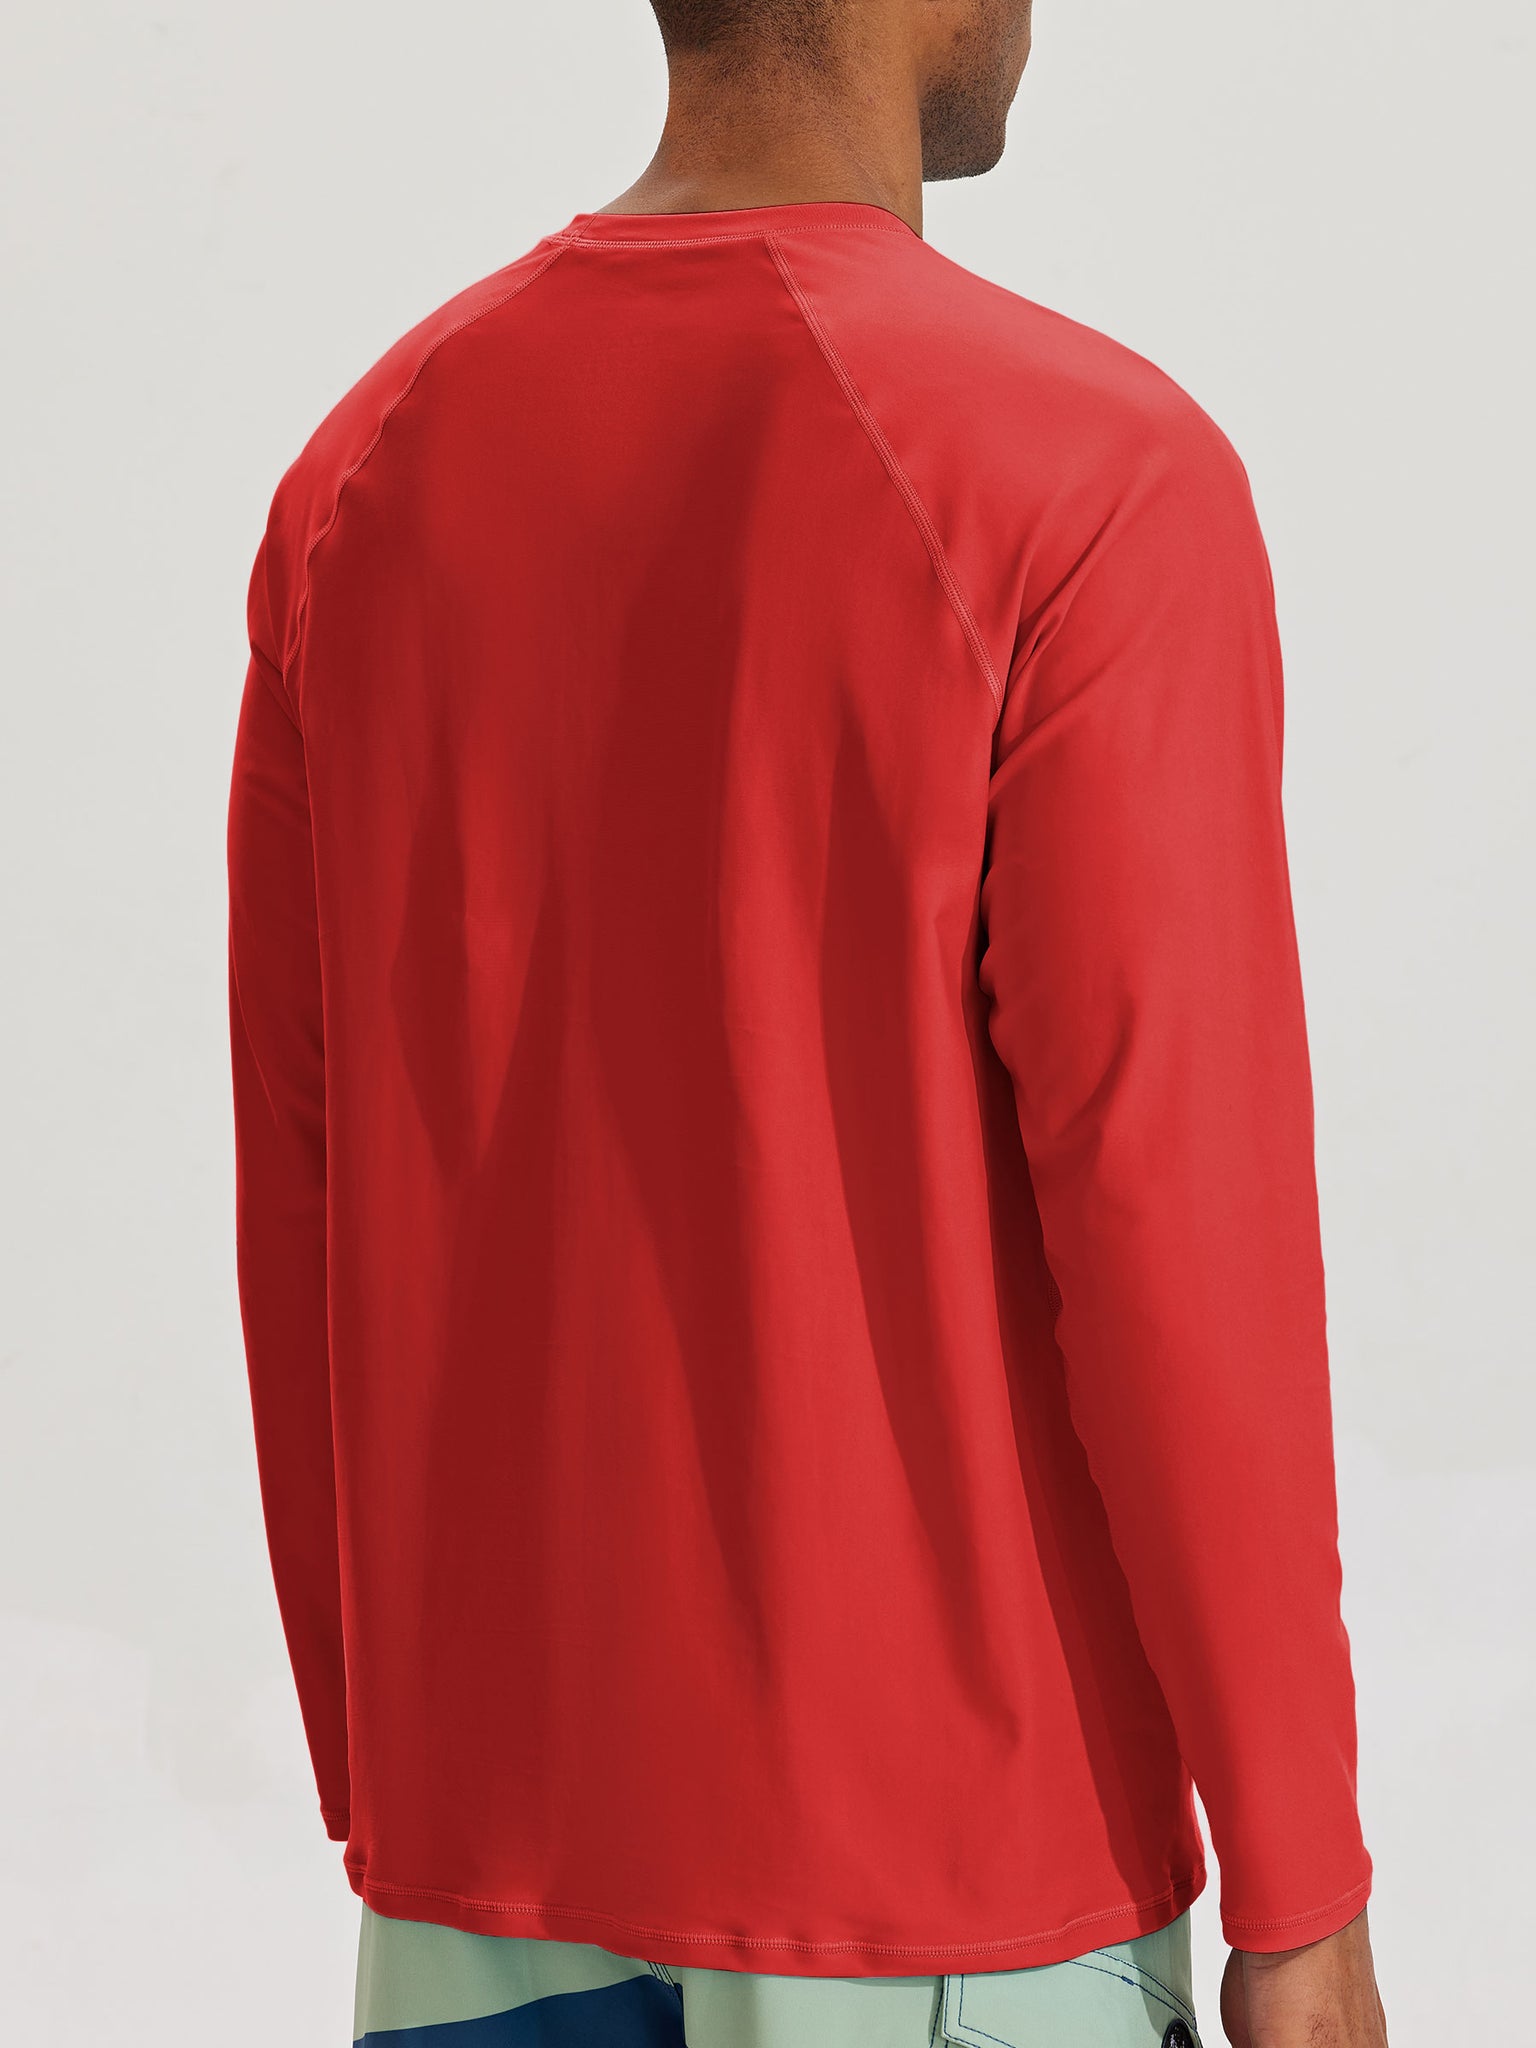 Men's Sun Protection Long Sleeve Shirt_Red_model3